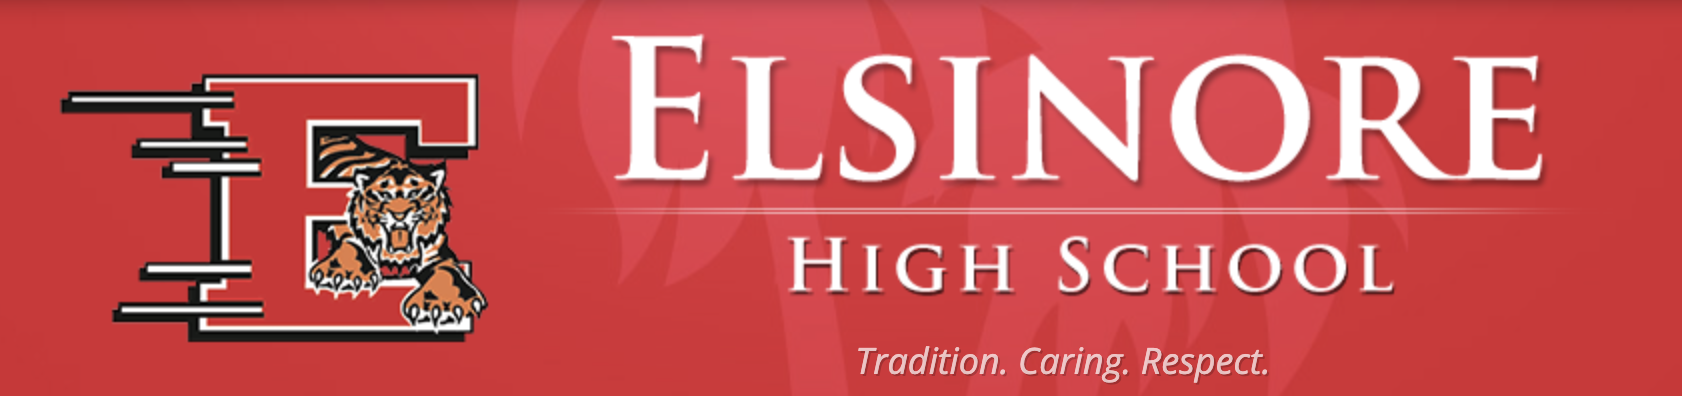 Elsinore High School